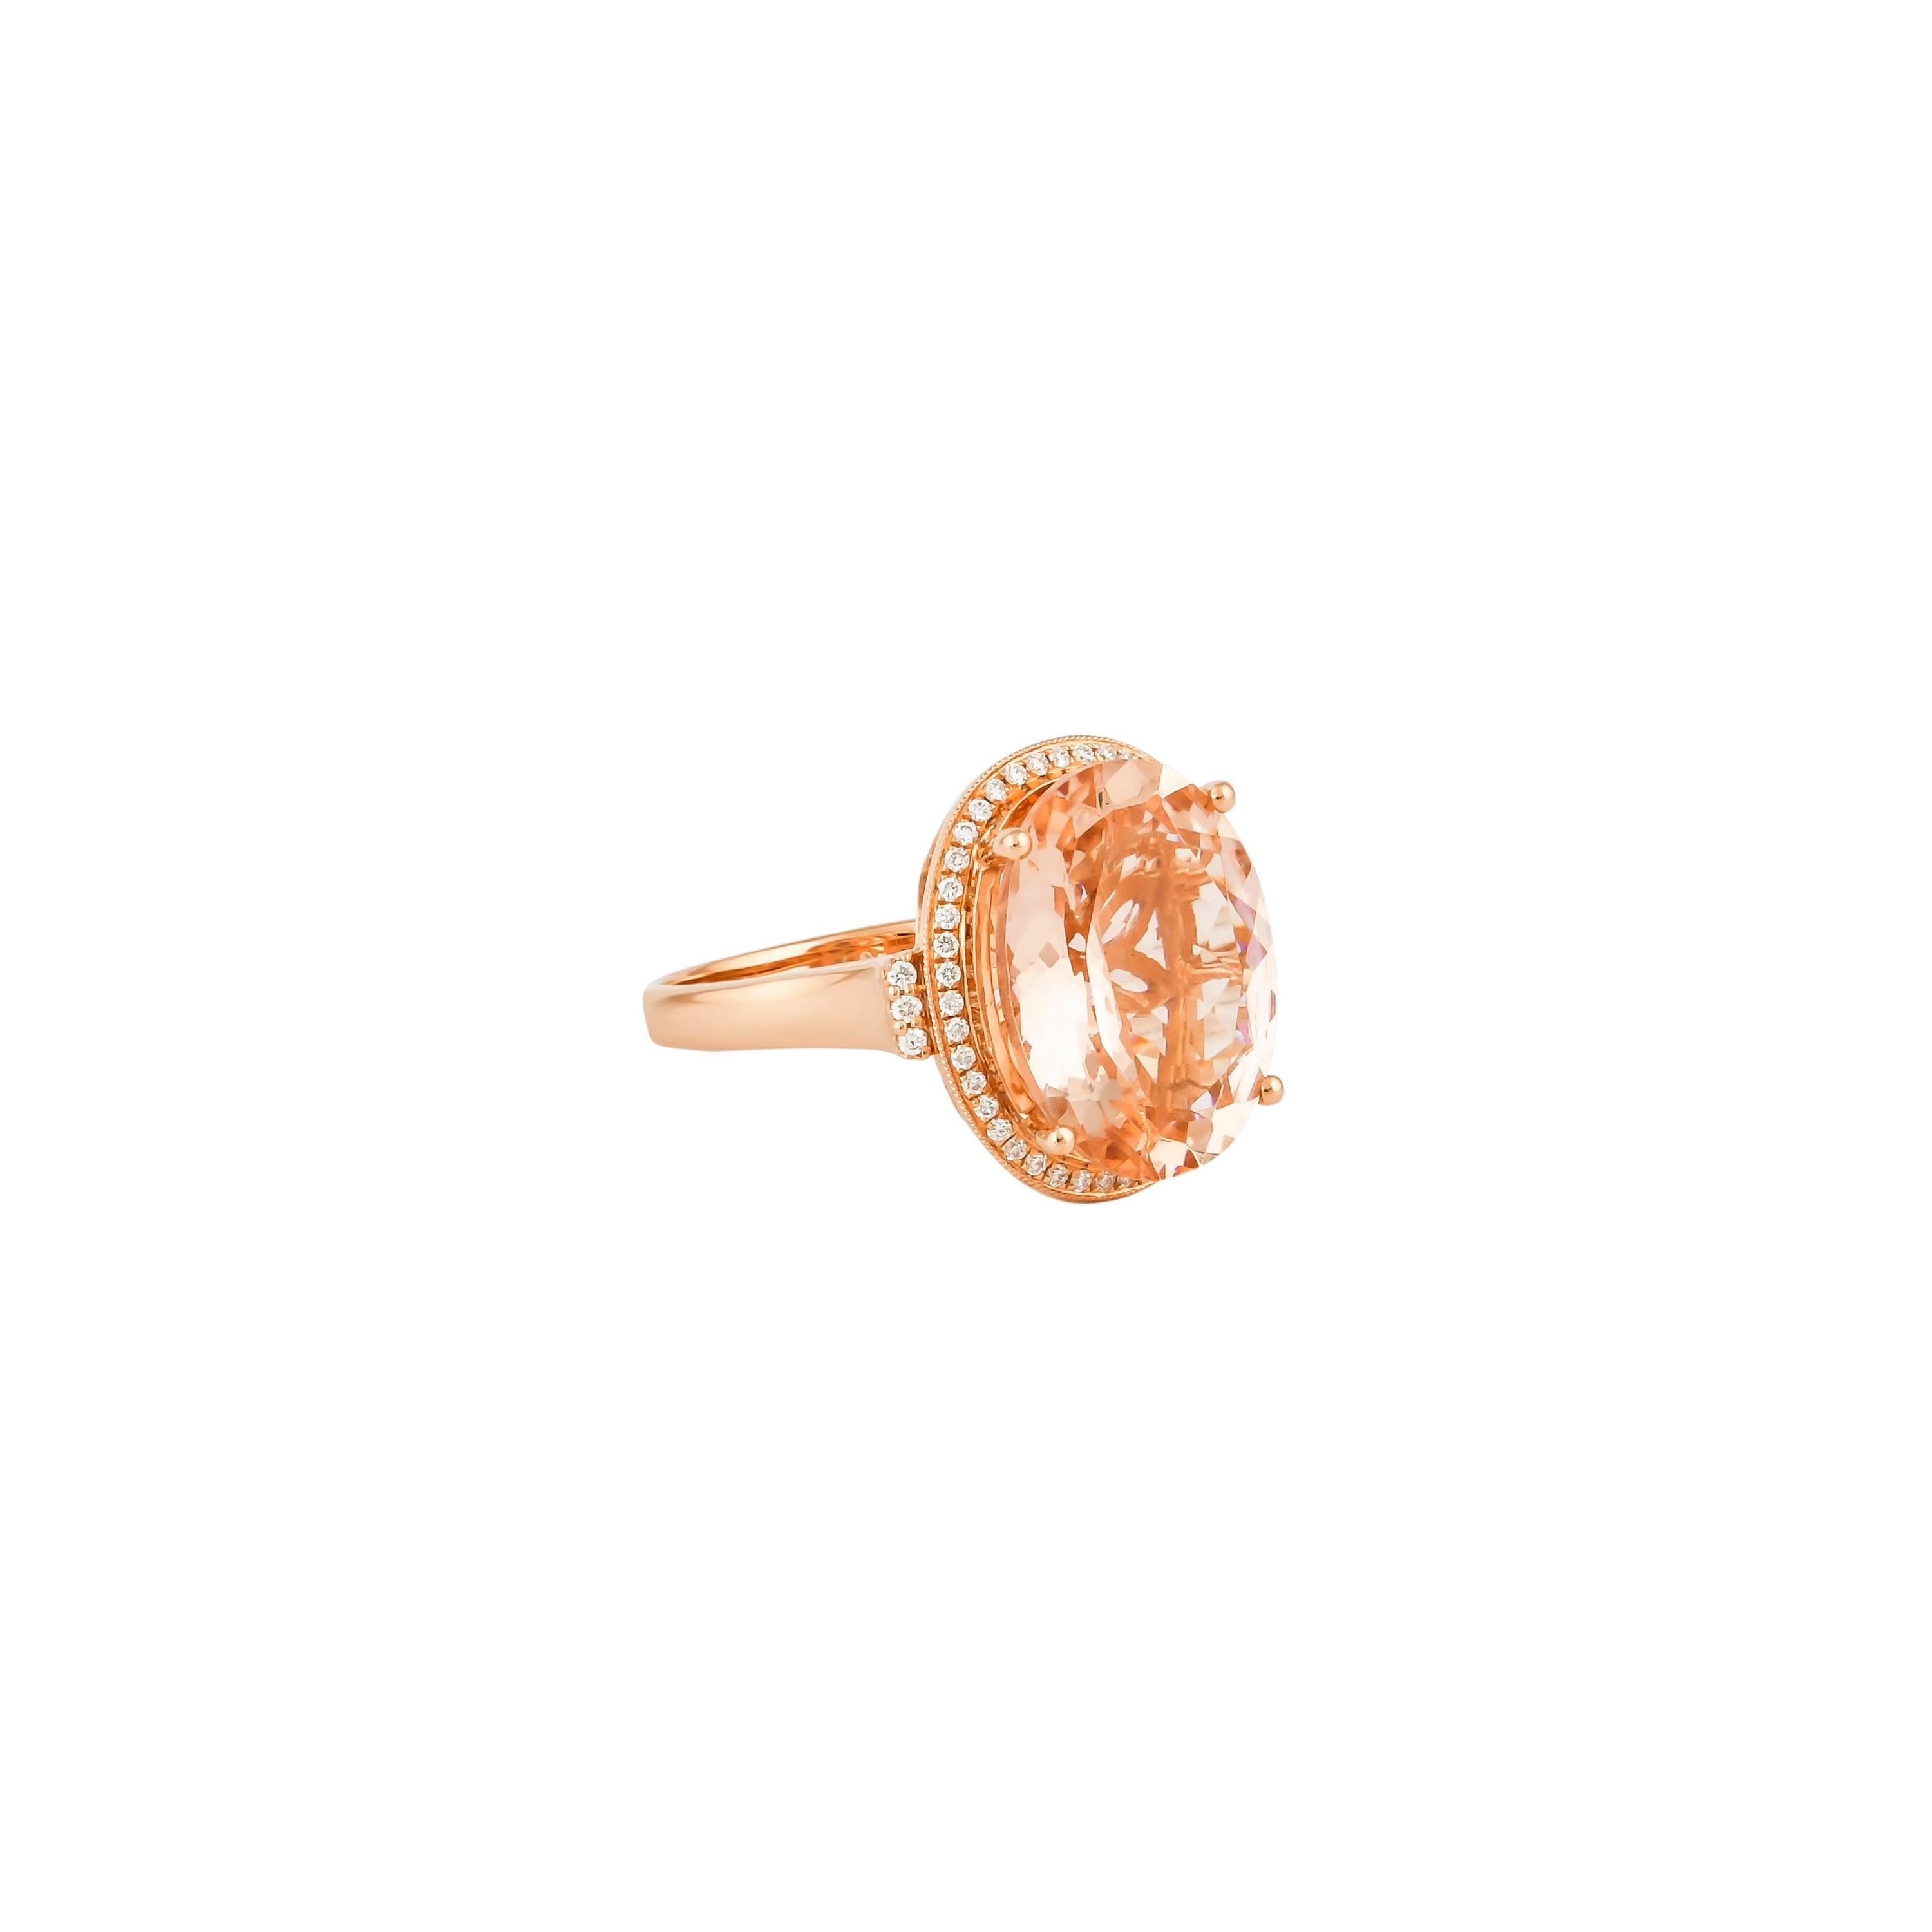 Contemporary 7.7 Carat Morganite and Diamond Ring in 18 Karat Rose Gold